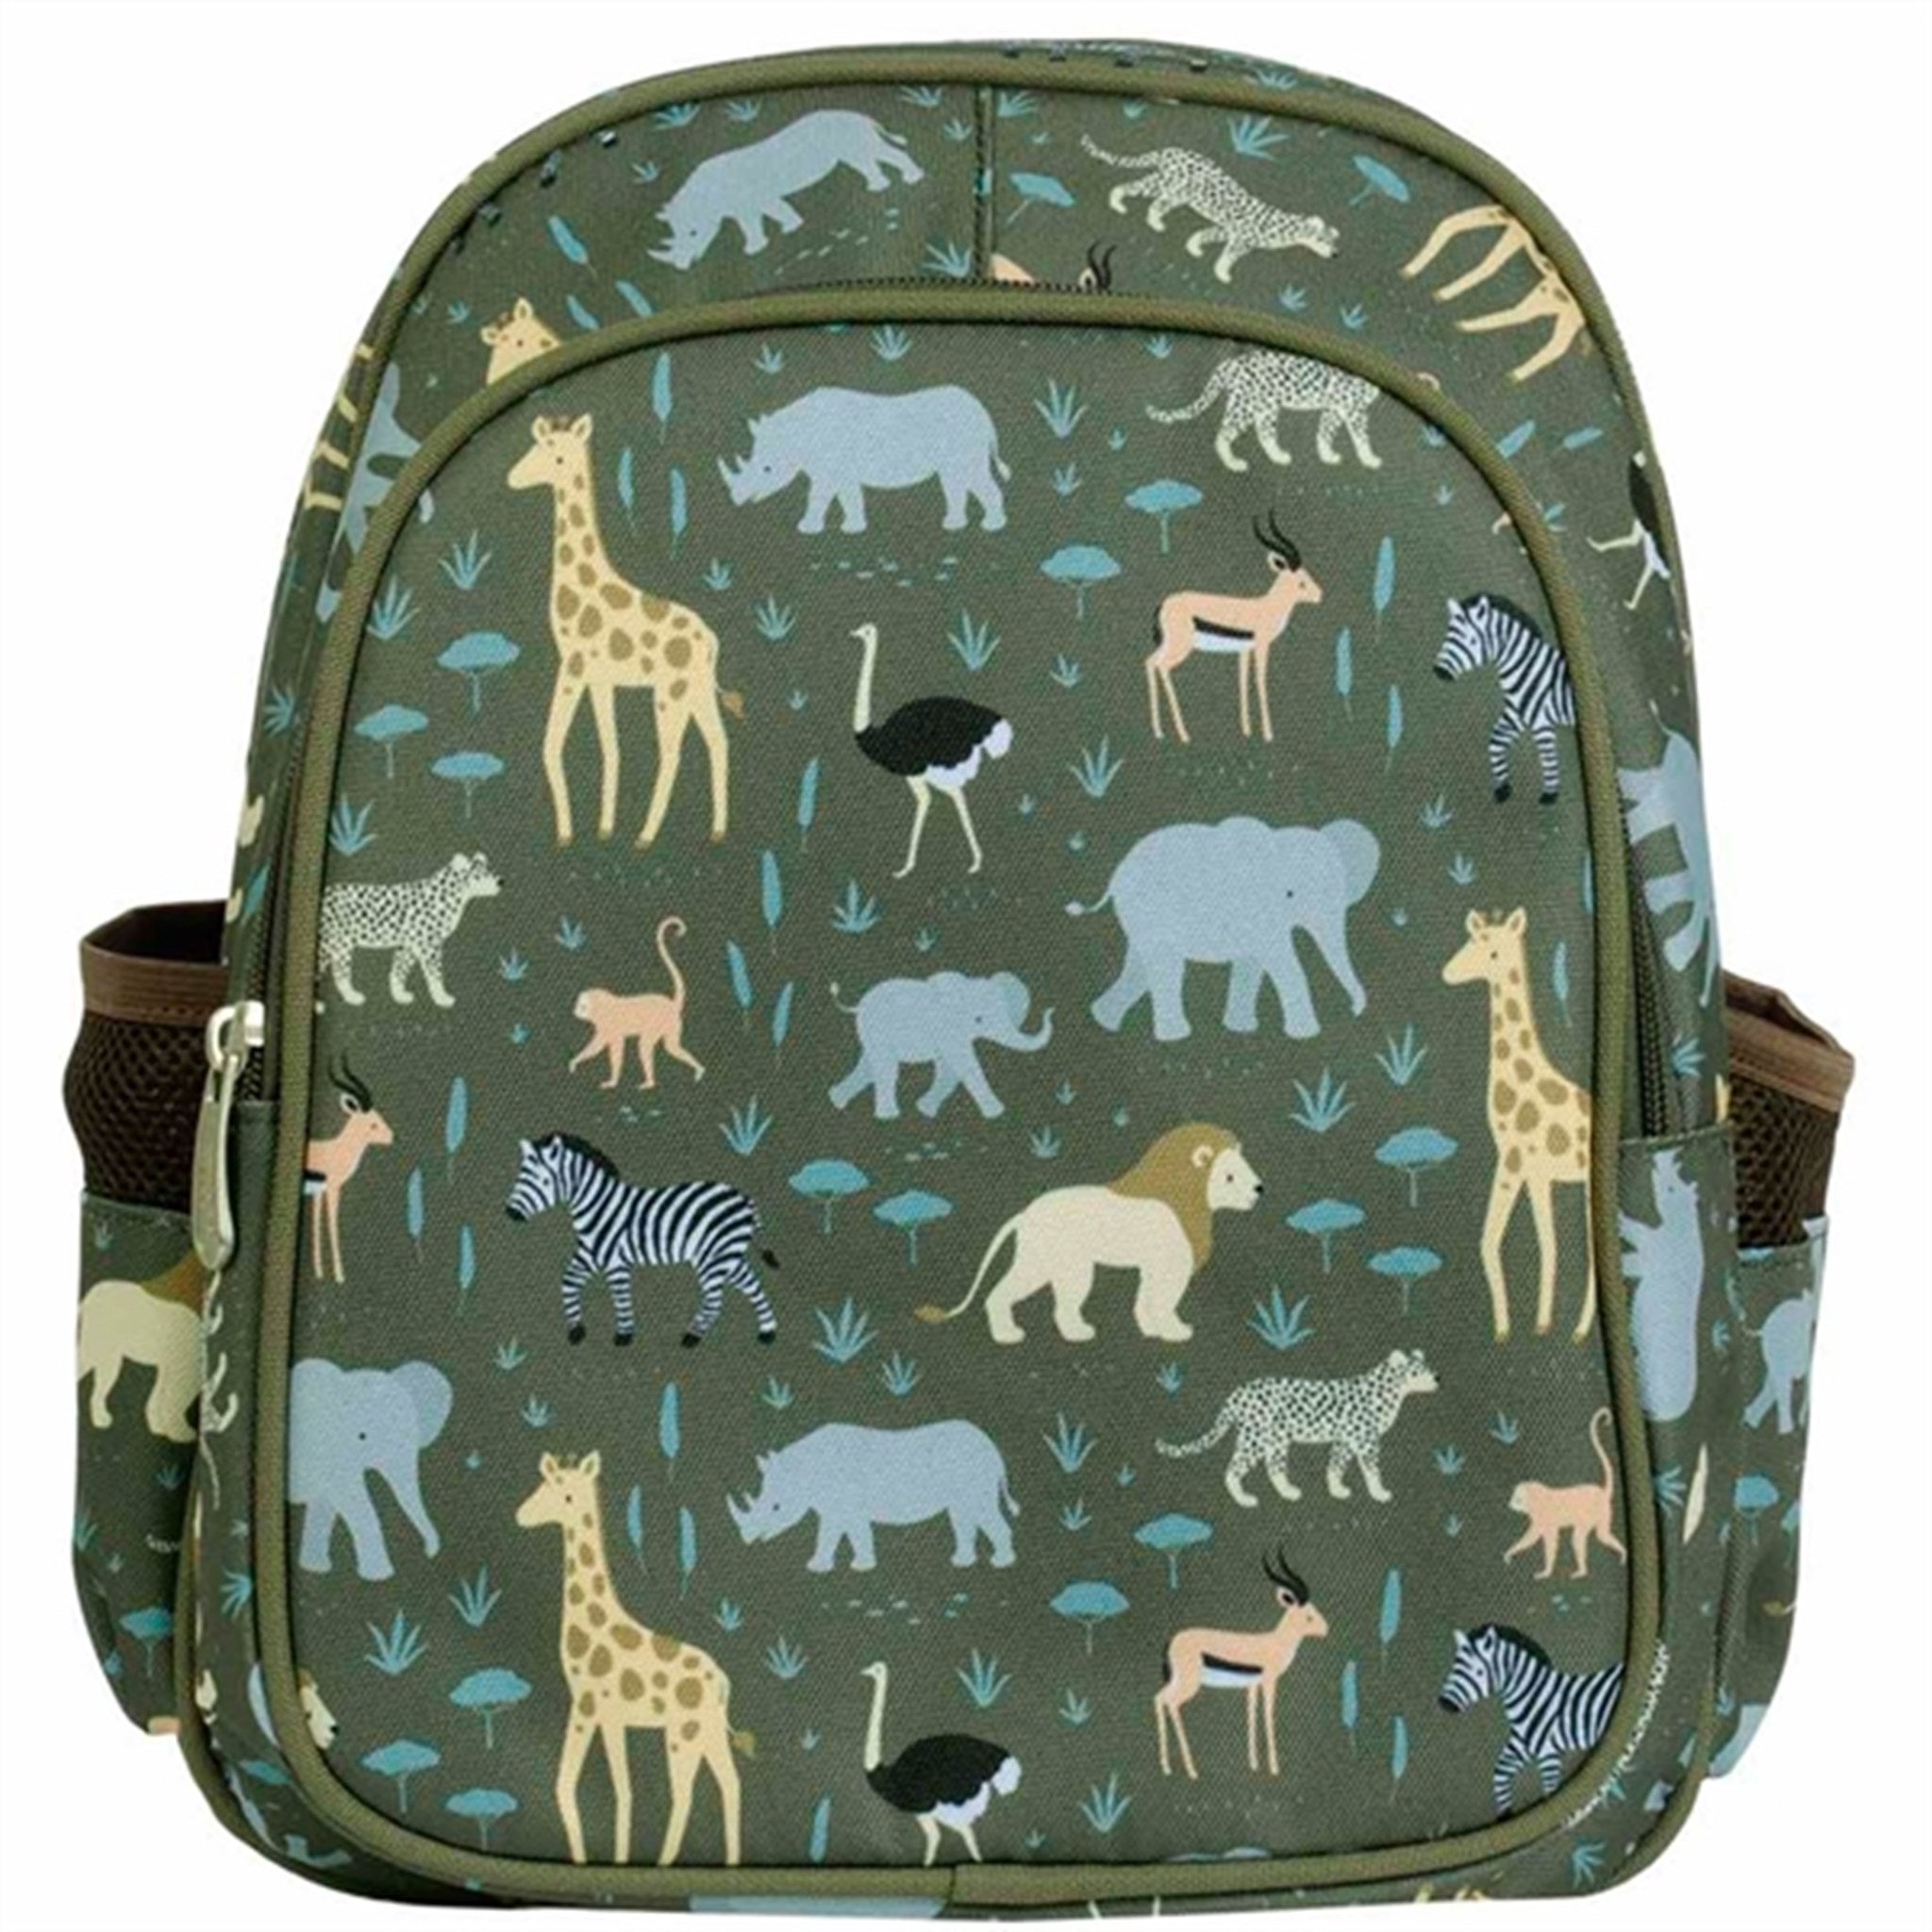 A Little Lovely Company Backpack Savanna